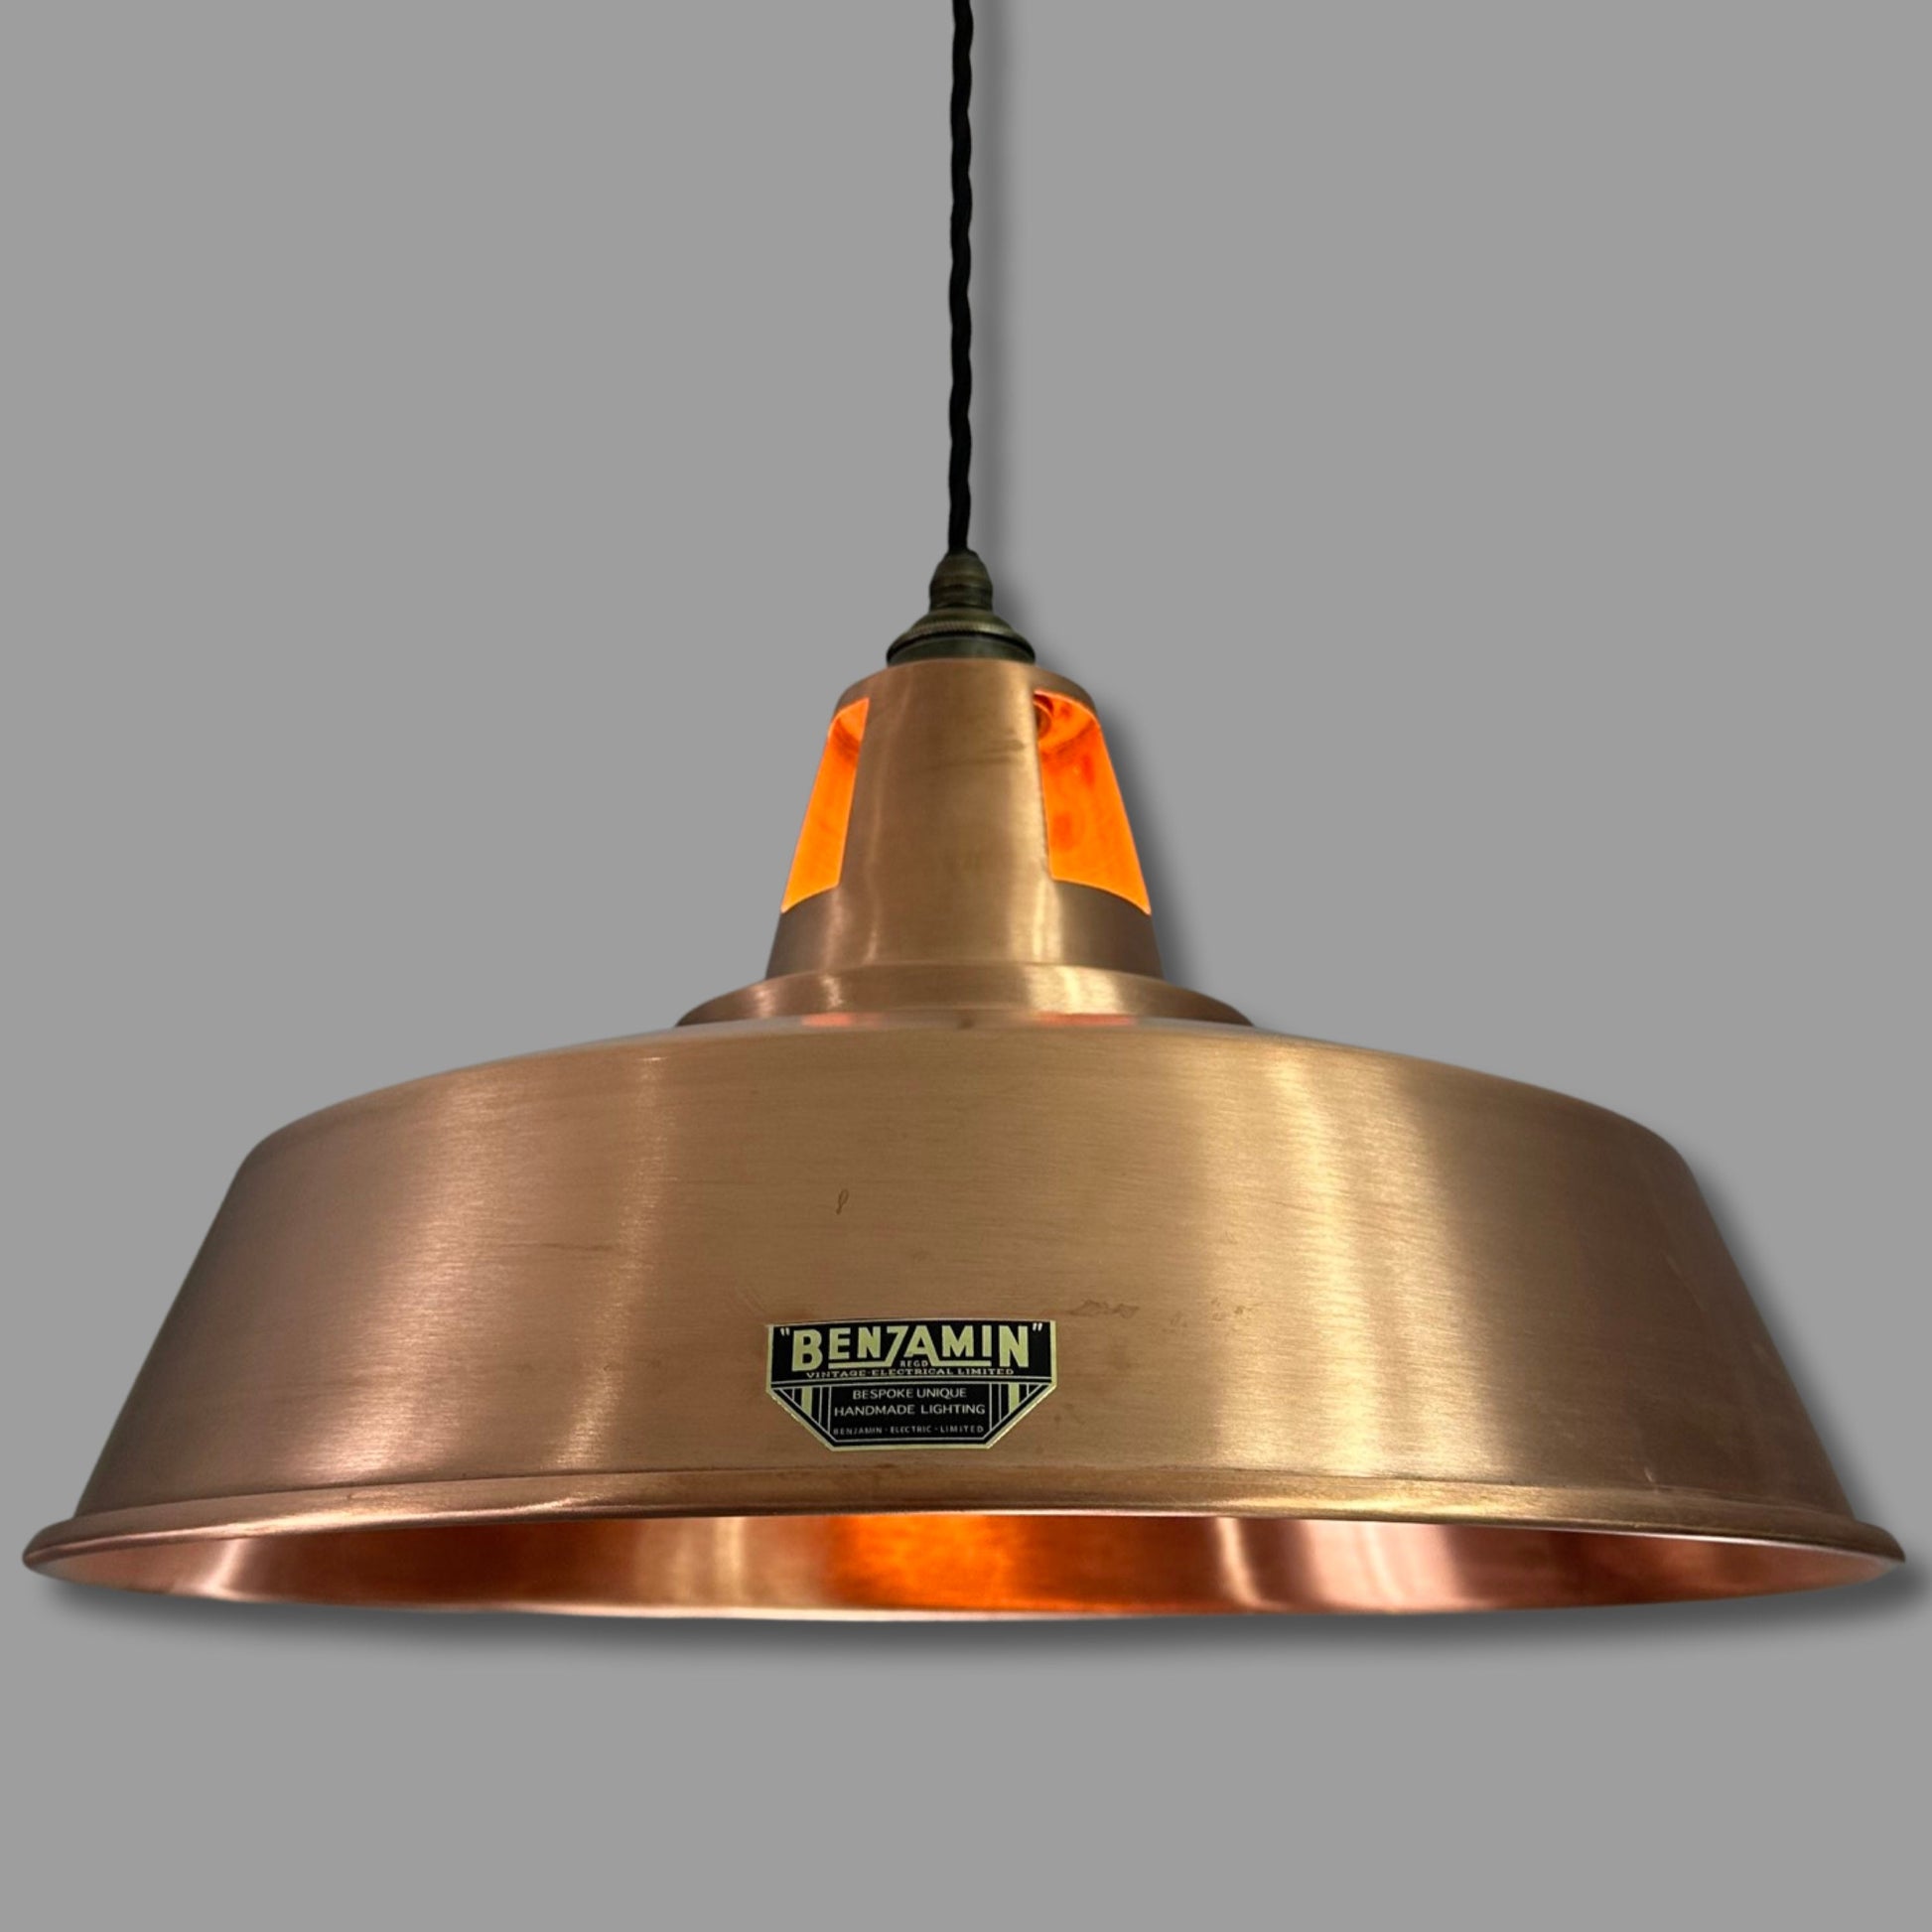 Wolferton XL ~ Copper Shade 1942 Design Pendant Set Light | Industrial Factory ceiling dining room kitchen vintage bulb | 15.5 Inch